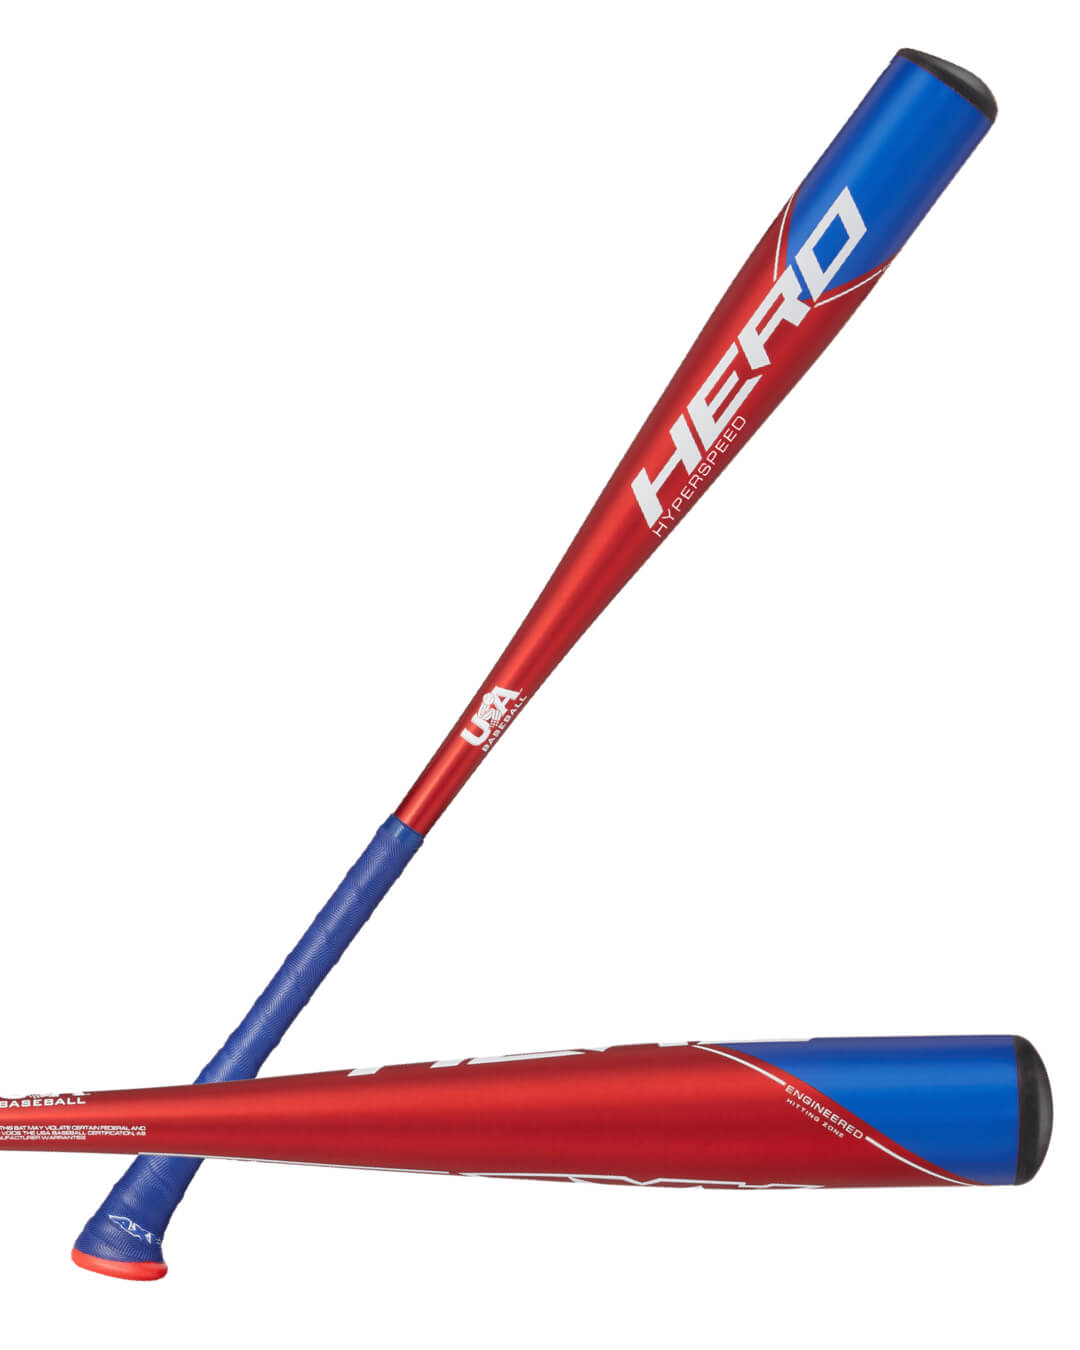 Axe Hero Hyperspeed -12 USA Baseball Bat: L198K